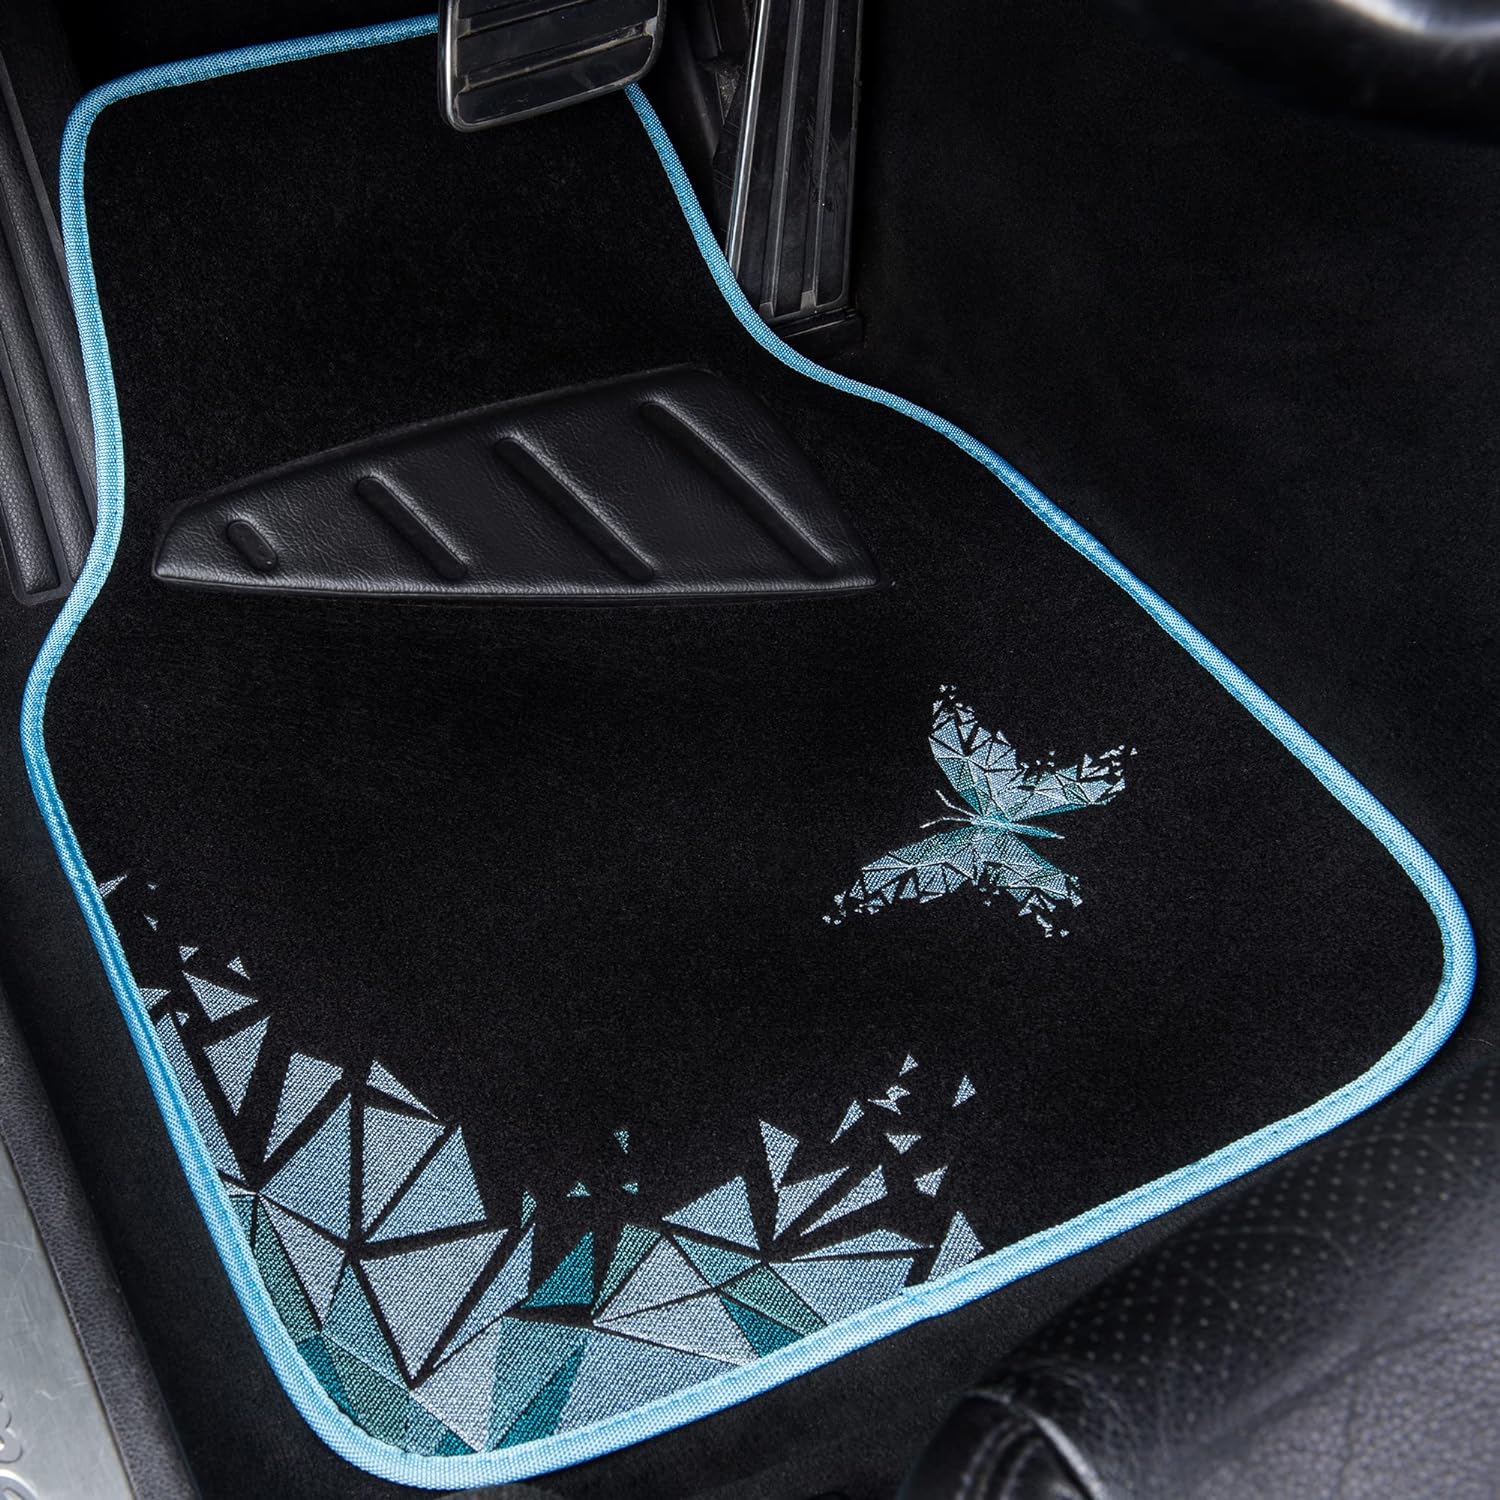 CAR PASS Universal Embroidery Geometric Butterfly Car Floor Mats with Heel Pad -Waterproof -Anti Slip Nibs, Blue Car Floor Mats Fit 95% Automotive,SUVS,Sedan,Vans,for Women,Girly (Blue Butterflies)